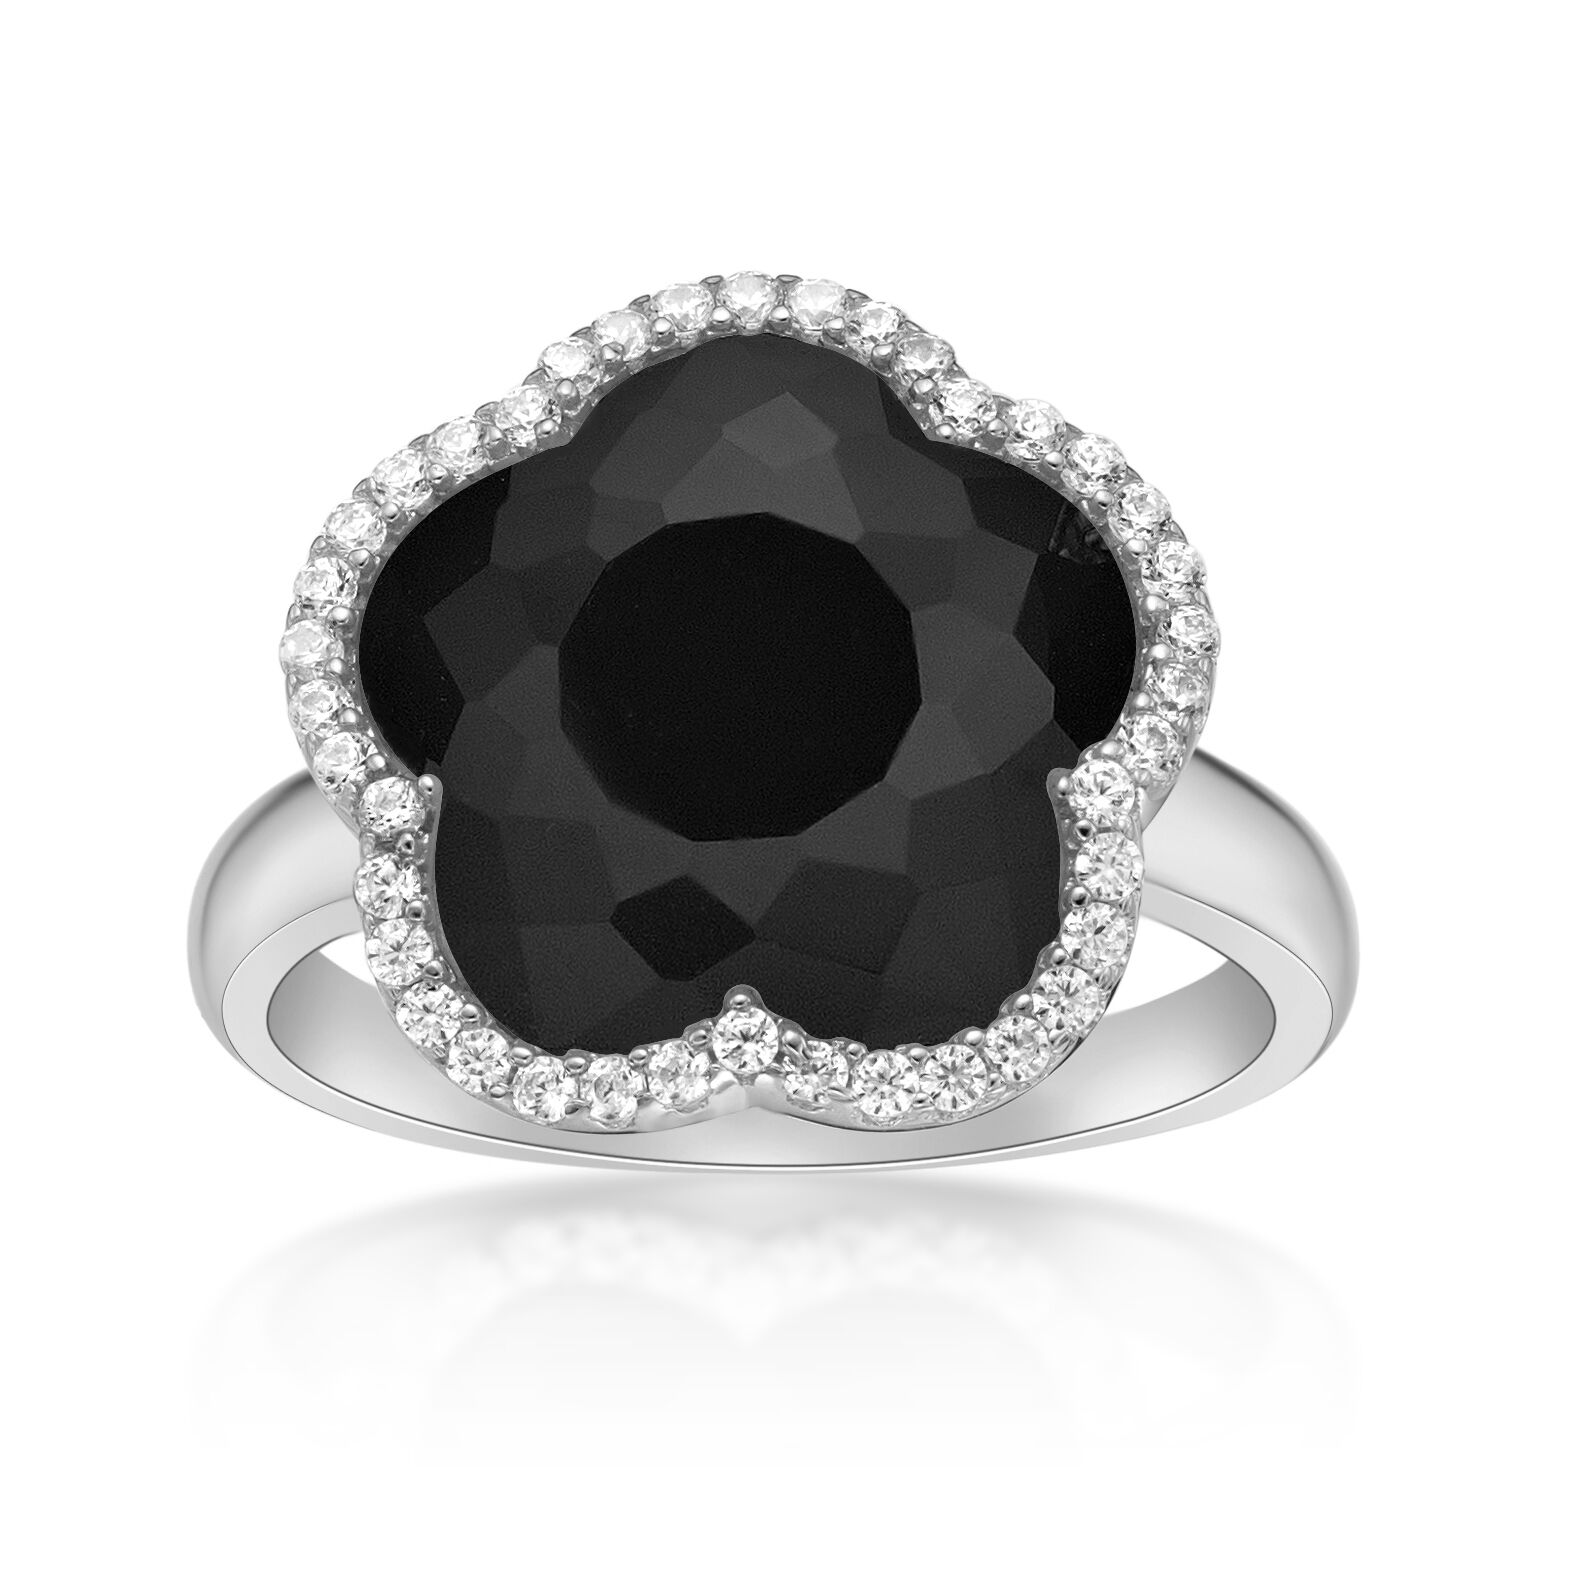 Lavari Jewelers Women’s Black Onyx Five Petal Flower Ring, 925 Sterling Silver, Cubic Zirconia